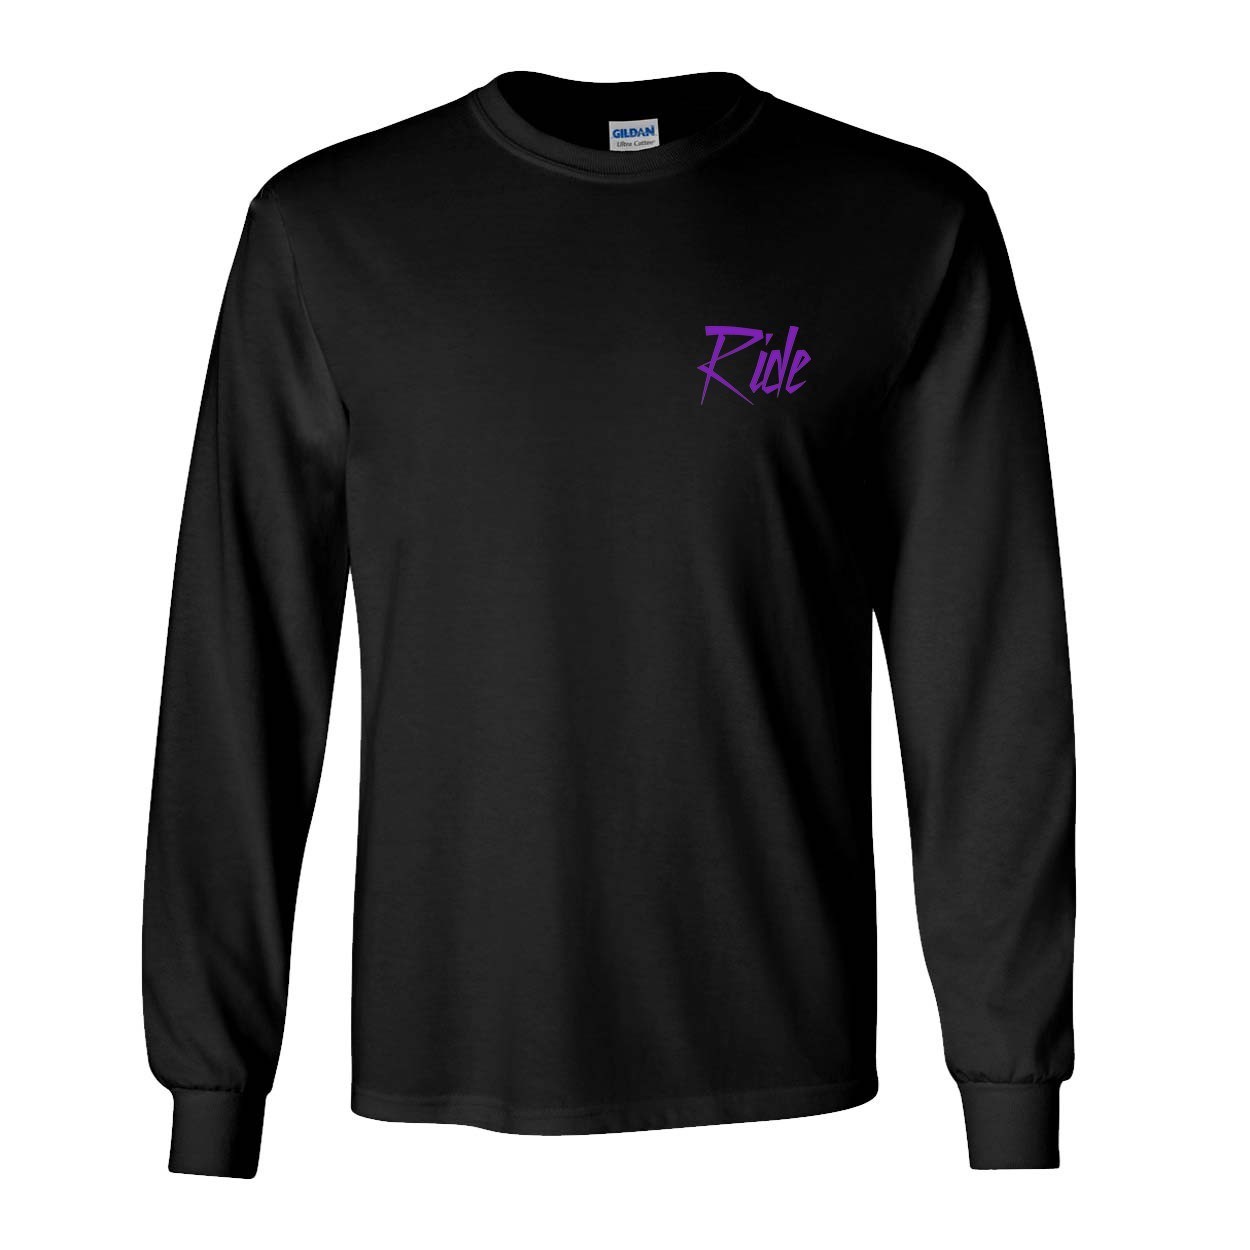 Ride Purple Logo Night Out Long Sleeve T-Shirt Black (White Logo)